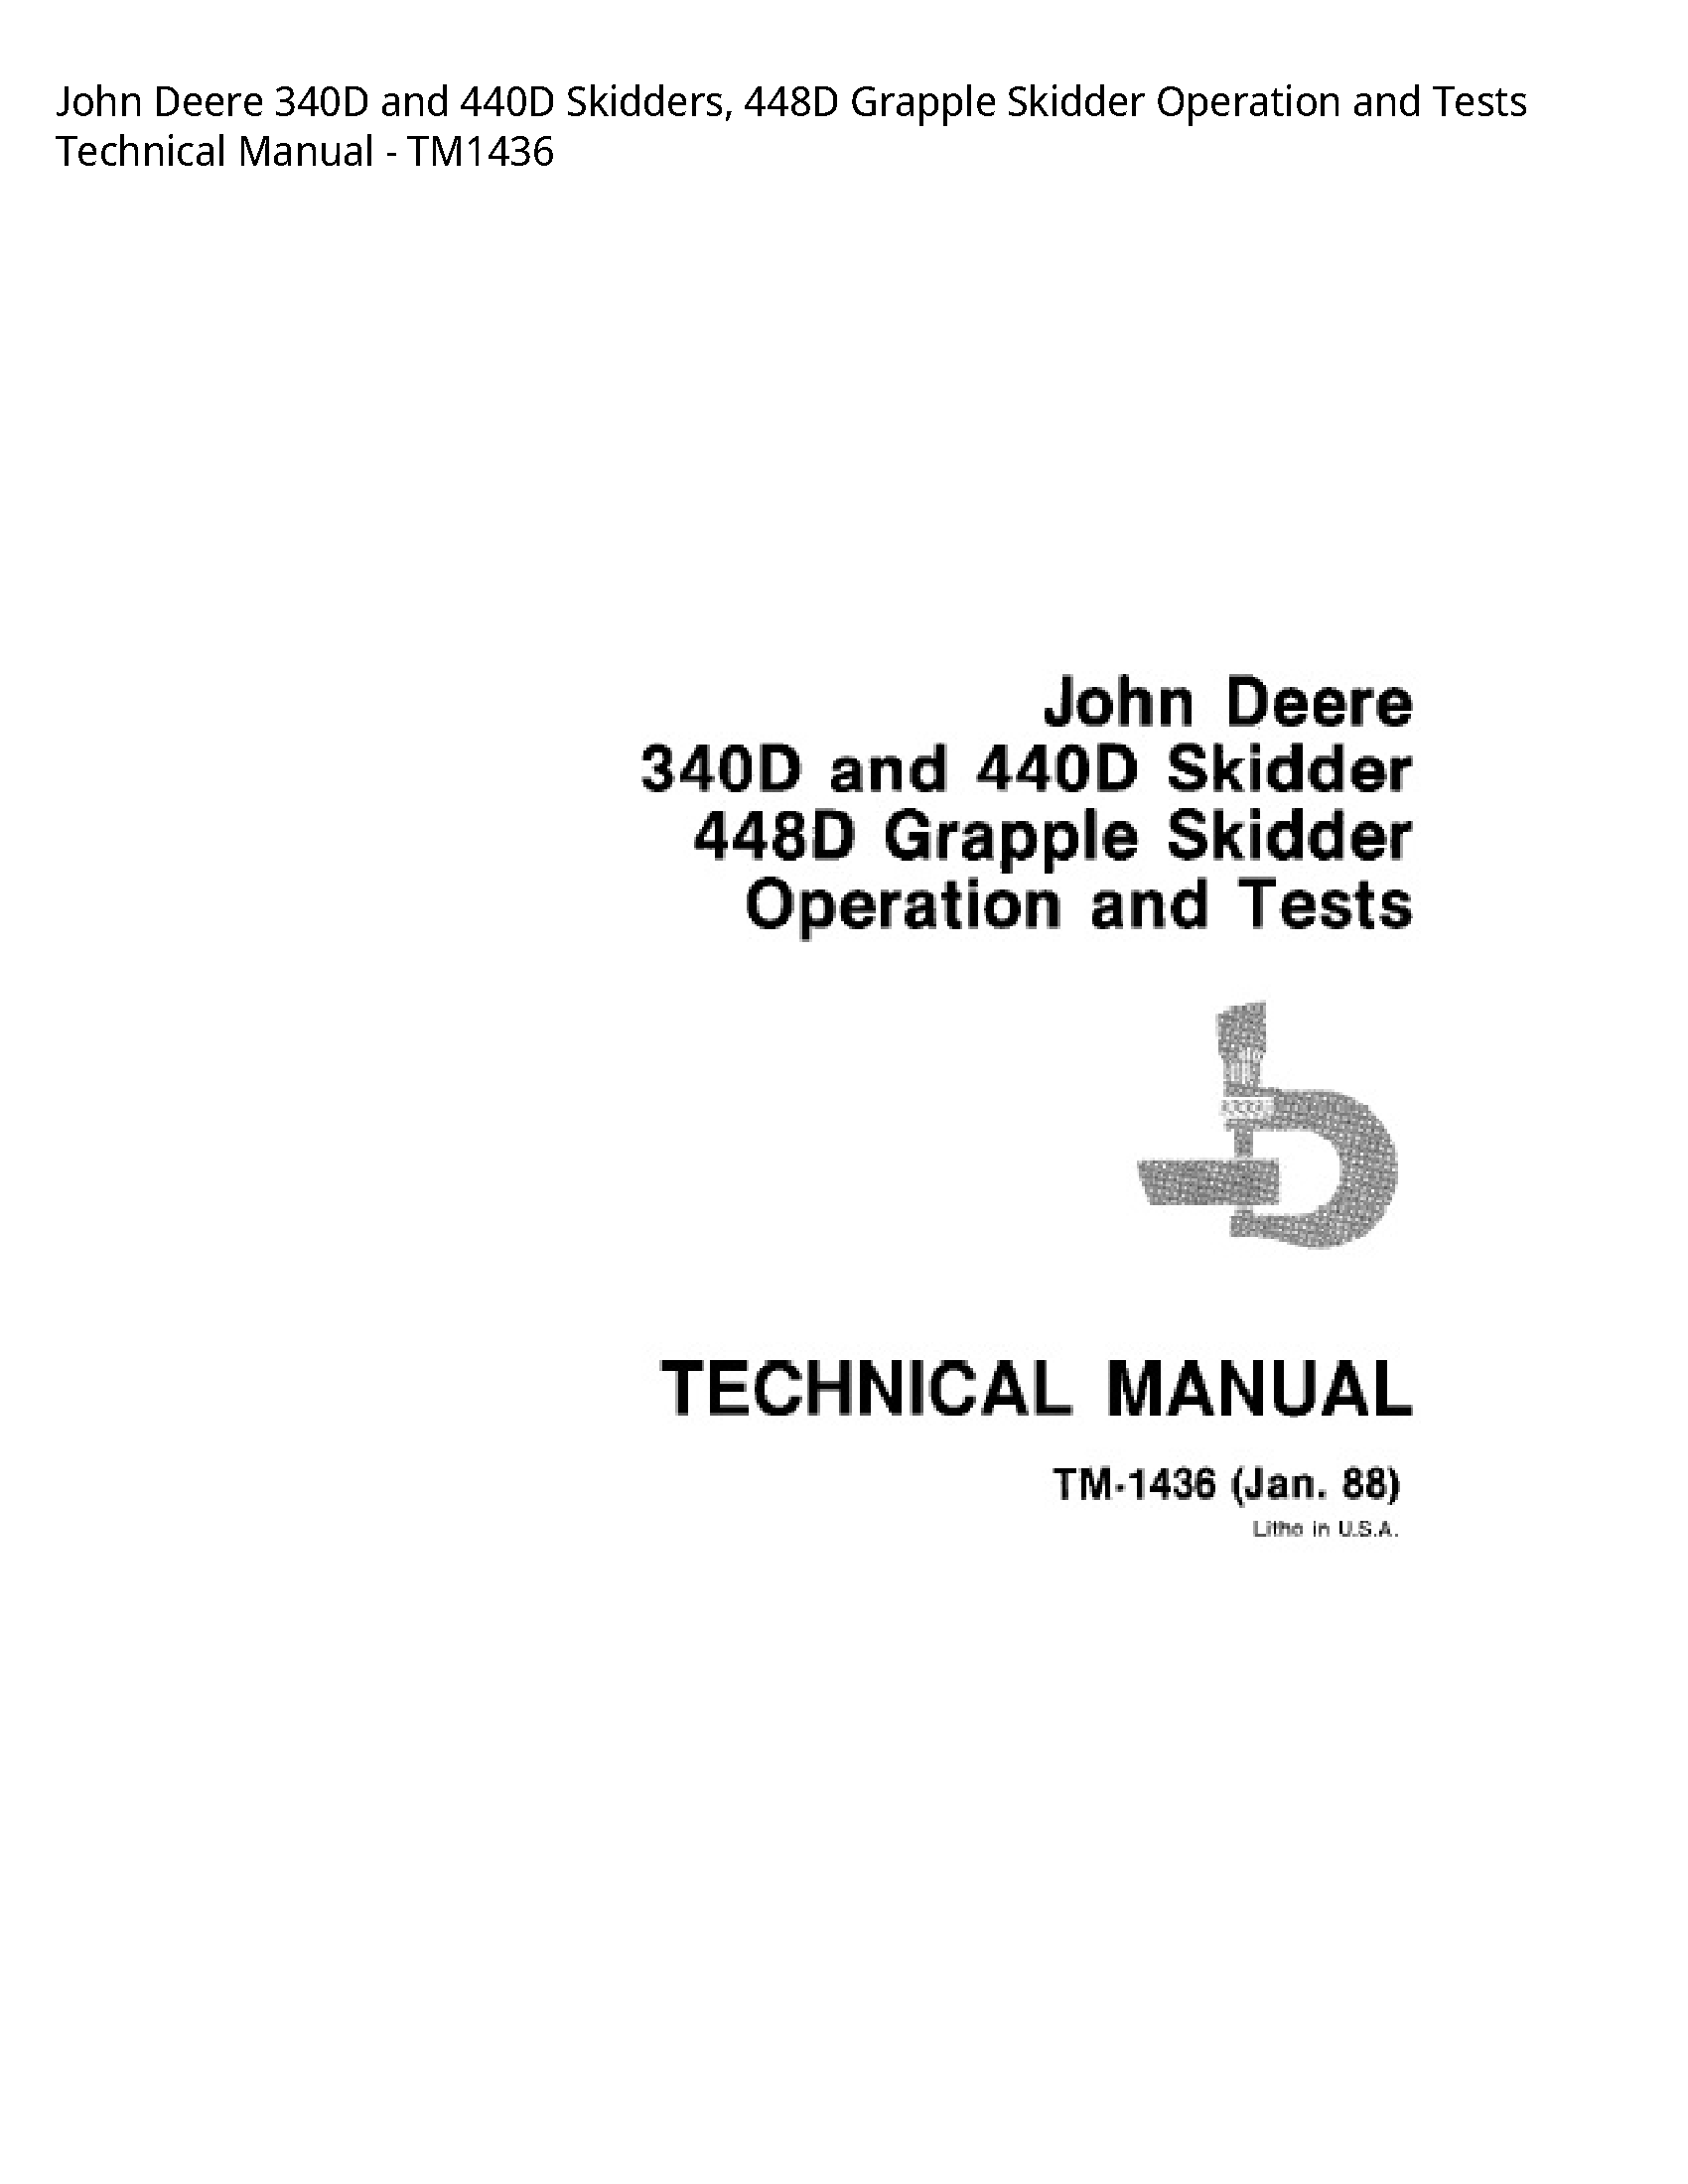 John Deere 340D  Skidders manual